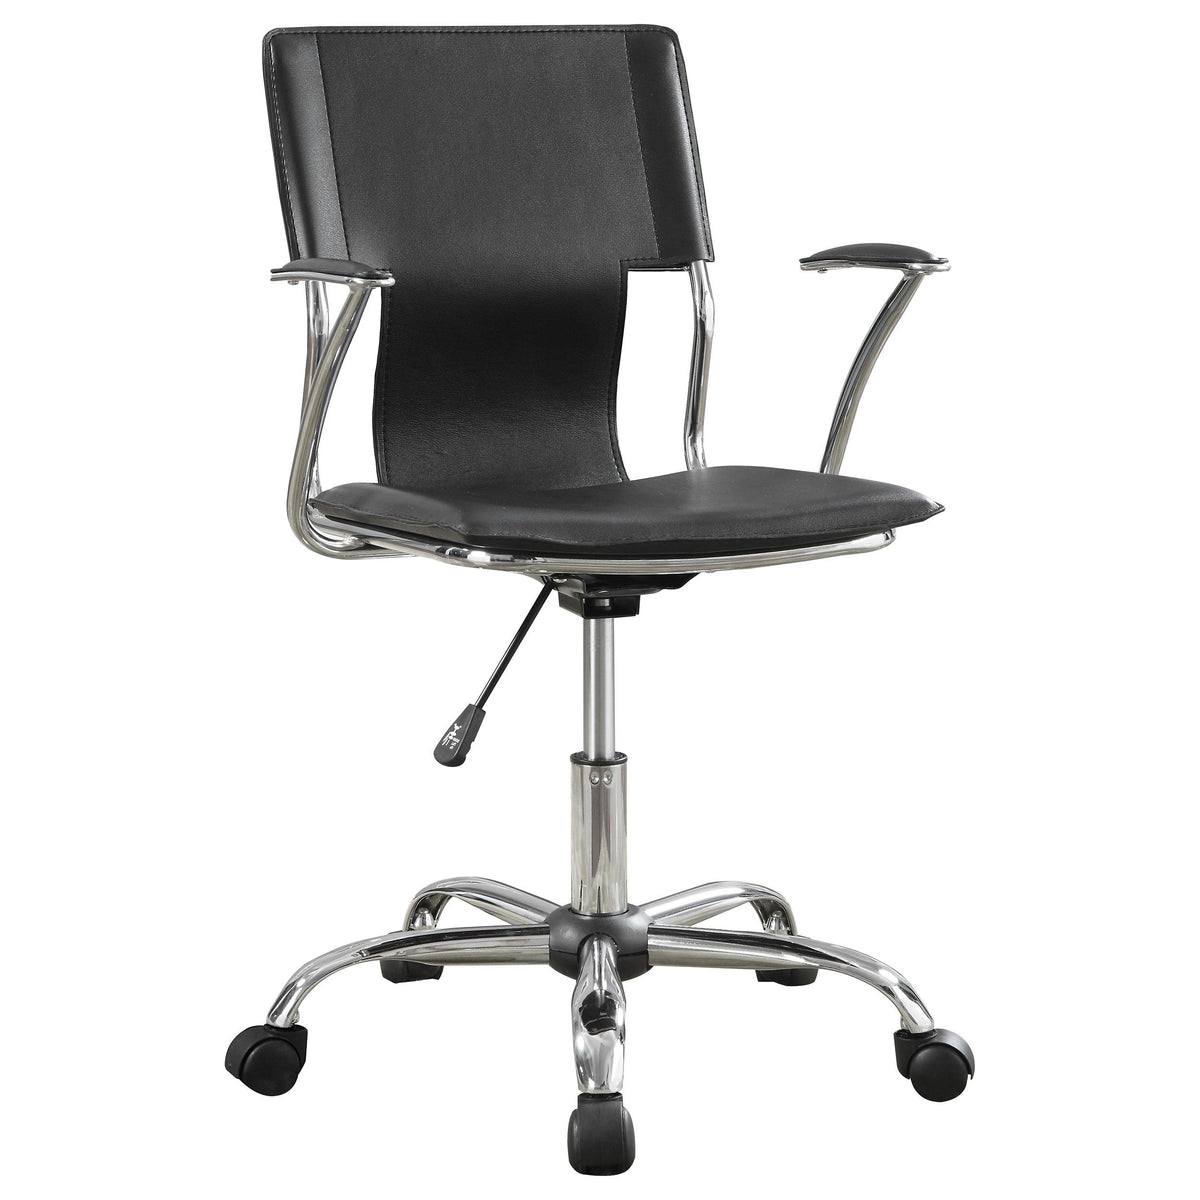 Himari Adjustable Height Office Chair Black and Chrome Himari Adjustable Height Office Chair Black and Chrome Half Price Furniture